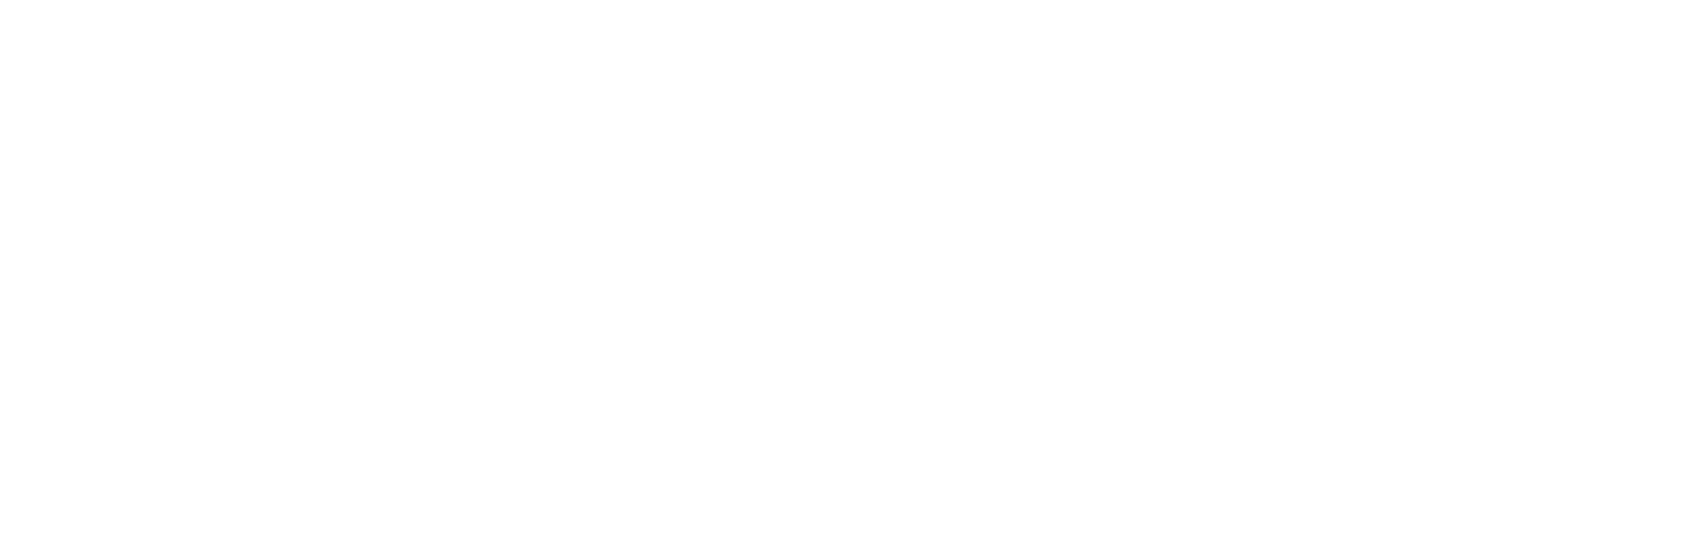 Cherry hills logo